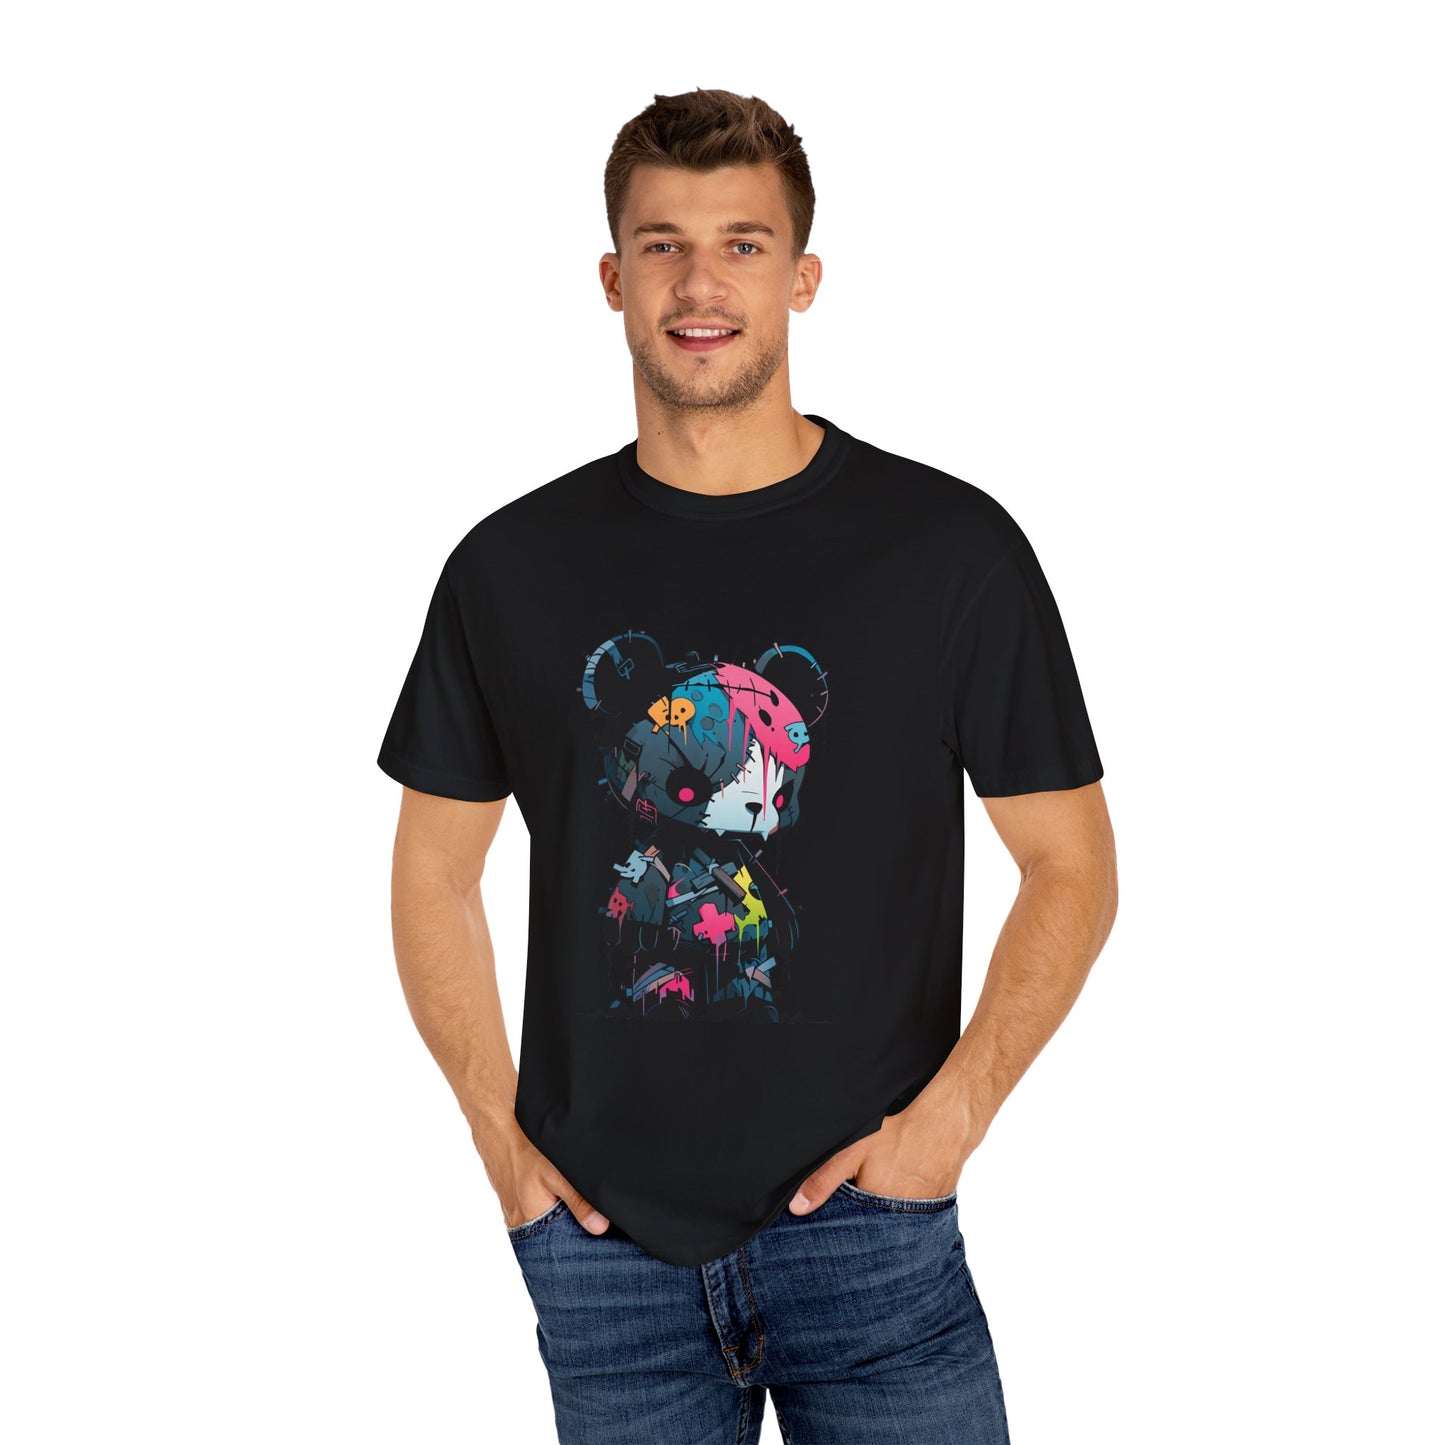 Hip Hop Teddy Bear Graphic Unisex Garment-dyed T-shirt Cotton Funny Humorous Graphic Soft Premium Unisex Men Women Black T-shirt Birthday Gift-21